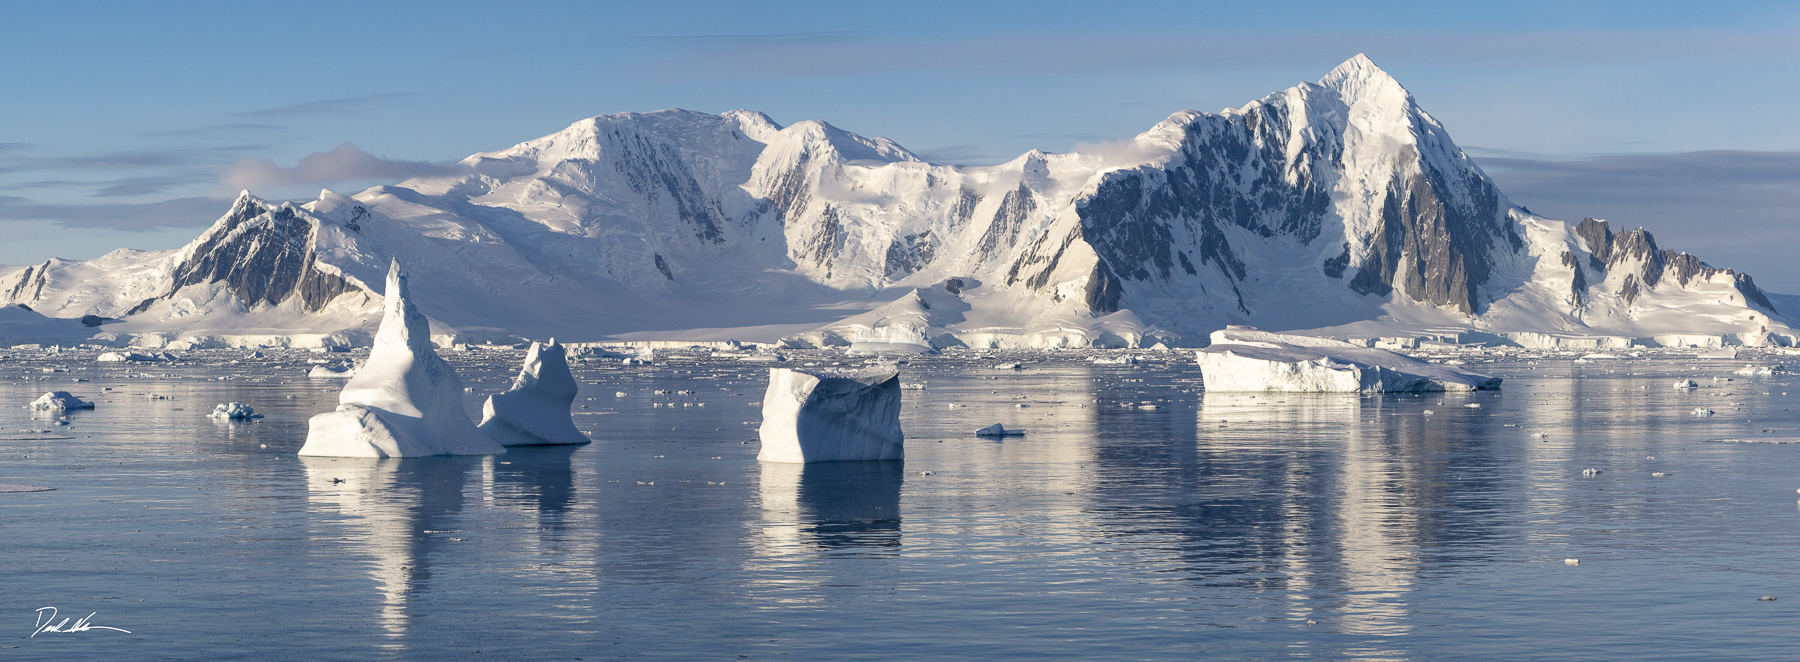 large icebergs floating in Antarctica